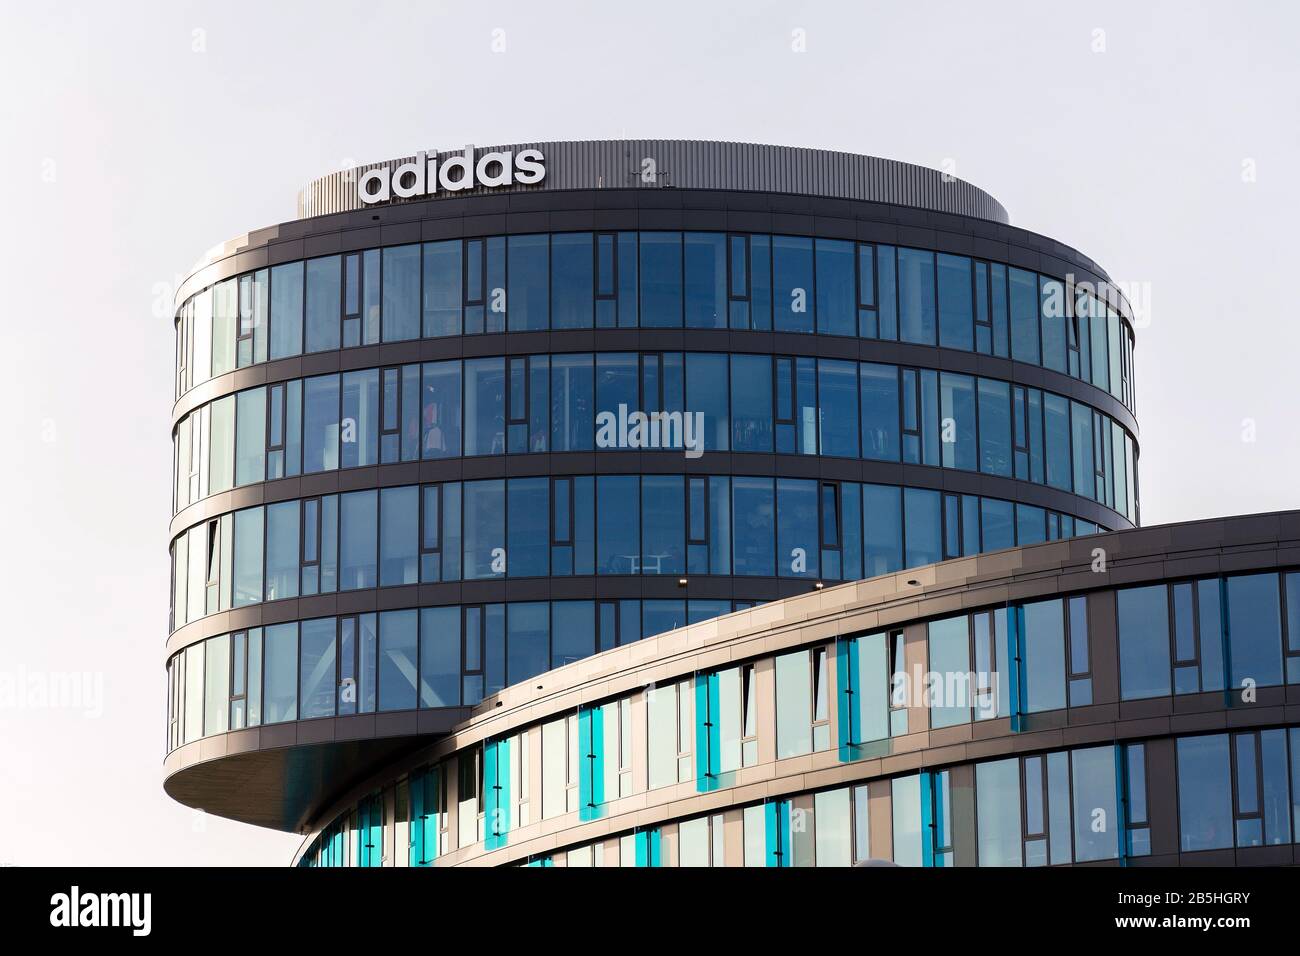 Comparación Con otras bandas Reunir Adidas headquarters fotografías e imágenes de alta resolución - Alamy